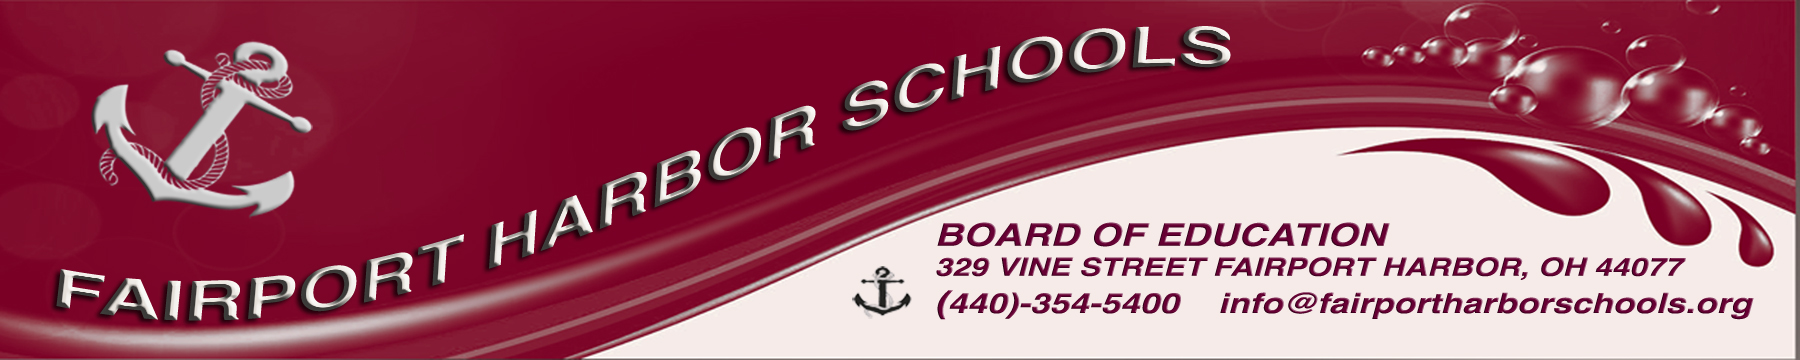 Fairport Harbor Schools